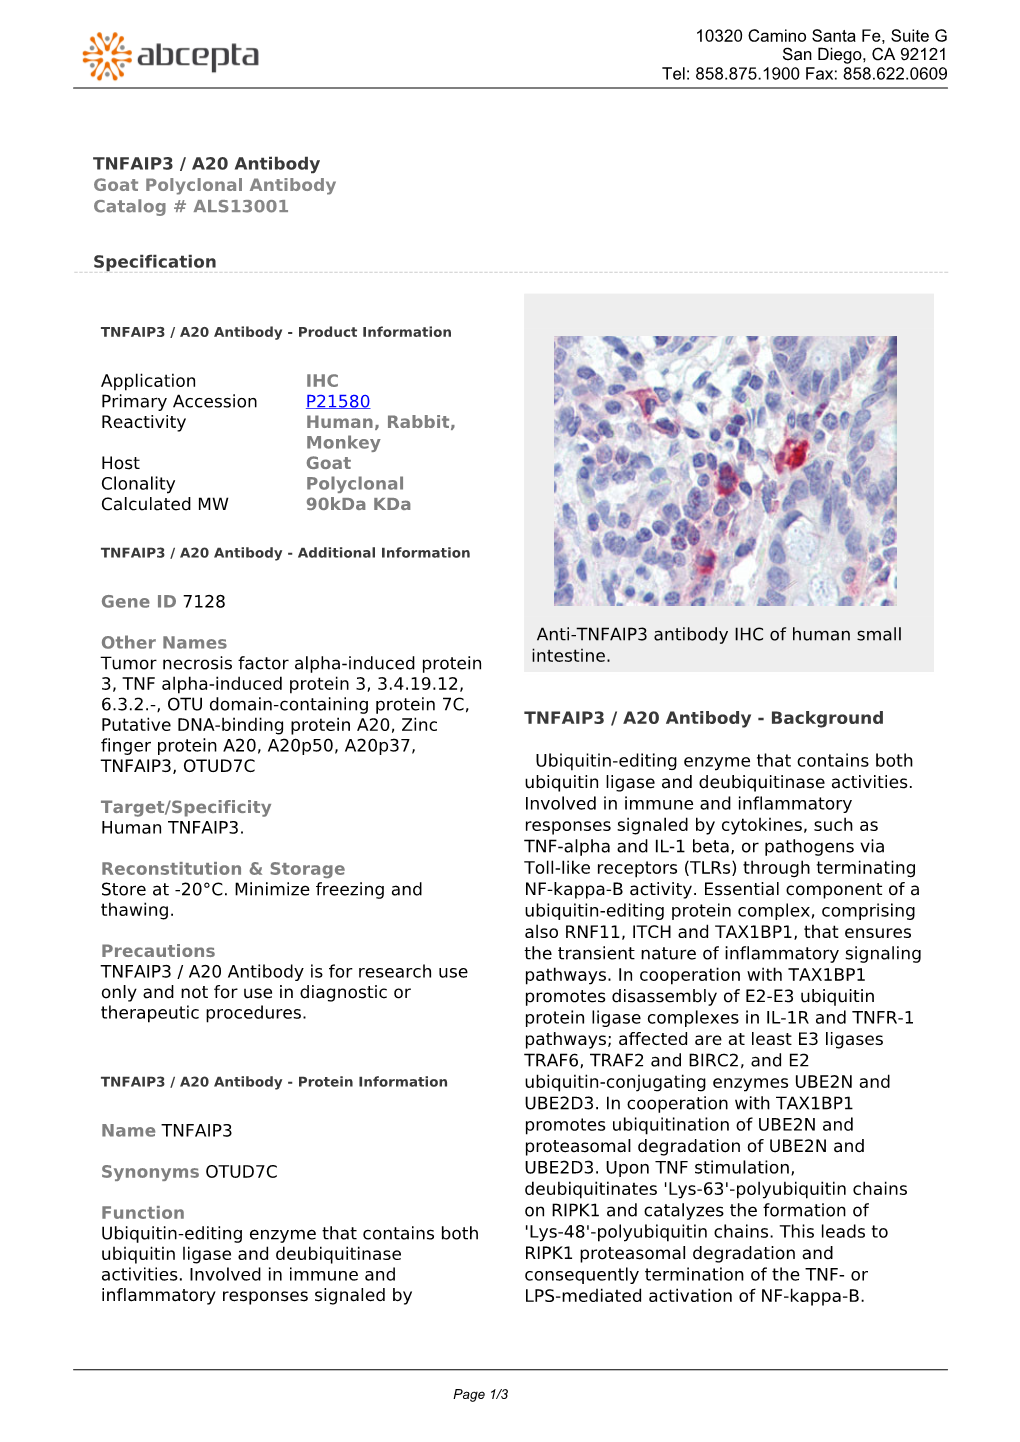 TNFAIP3 / A20 Antibody Goat Polyclonal Antibody Catalog # ALS13001